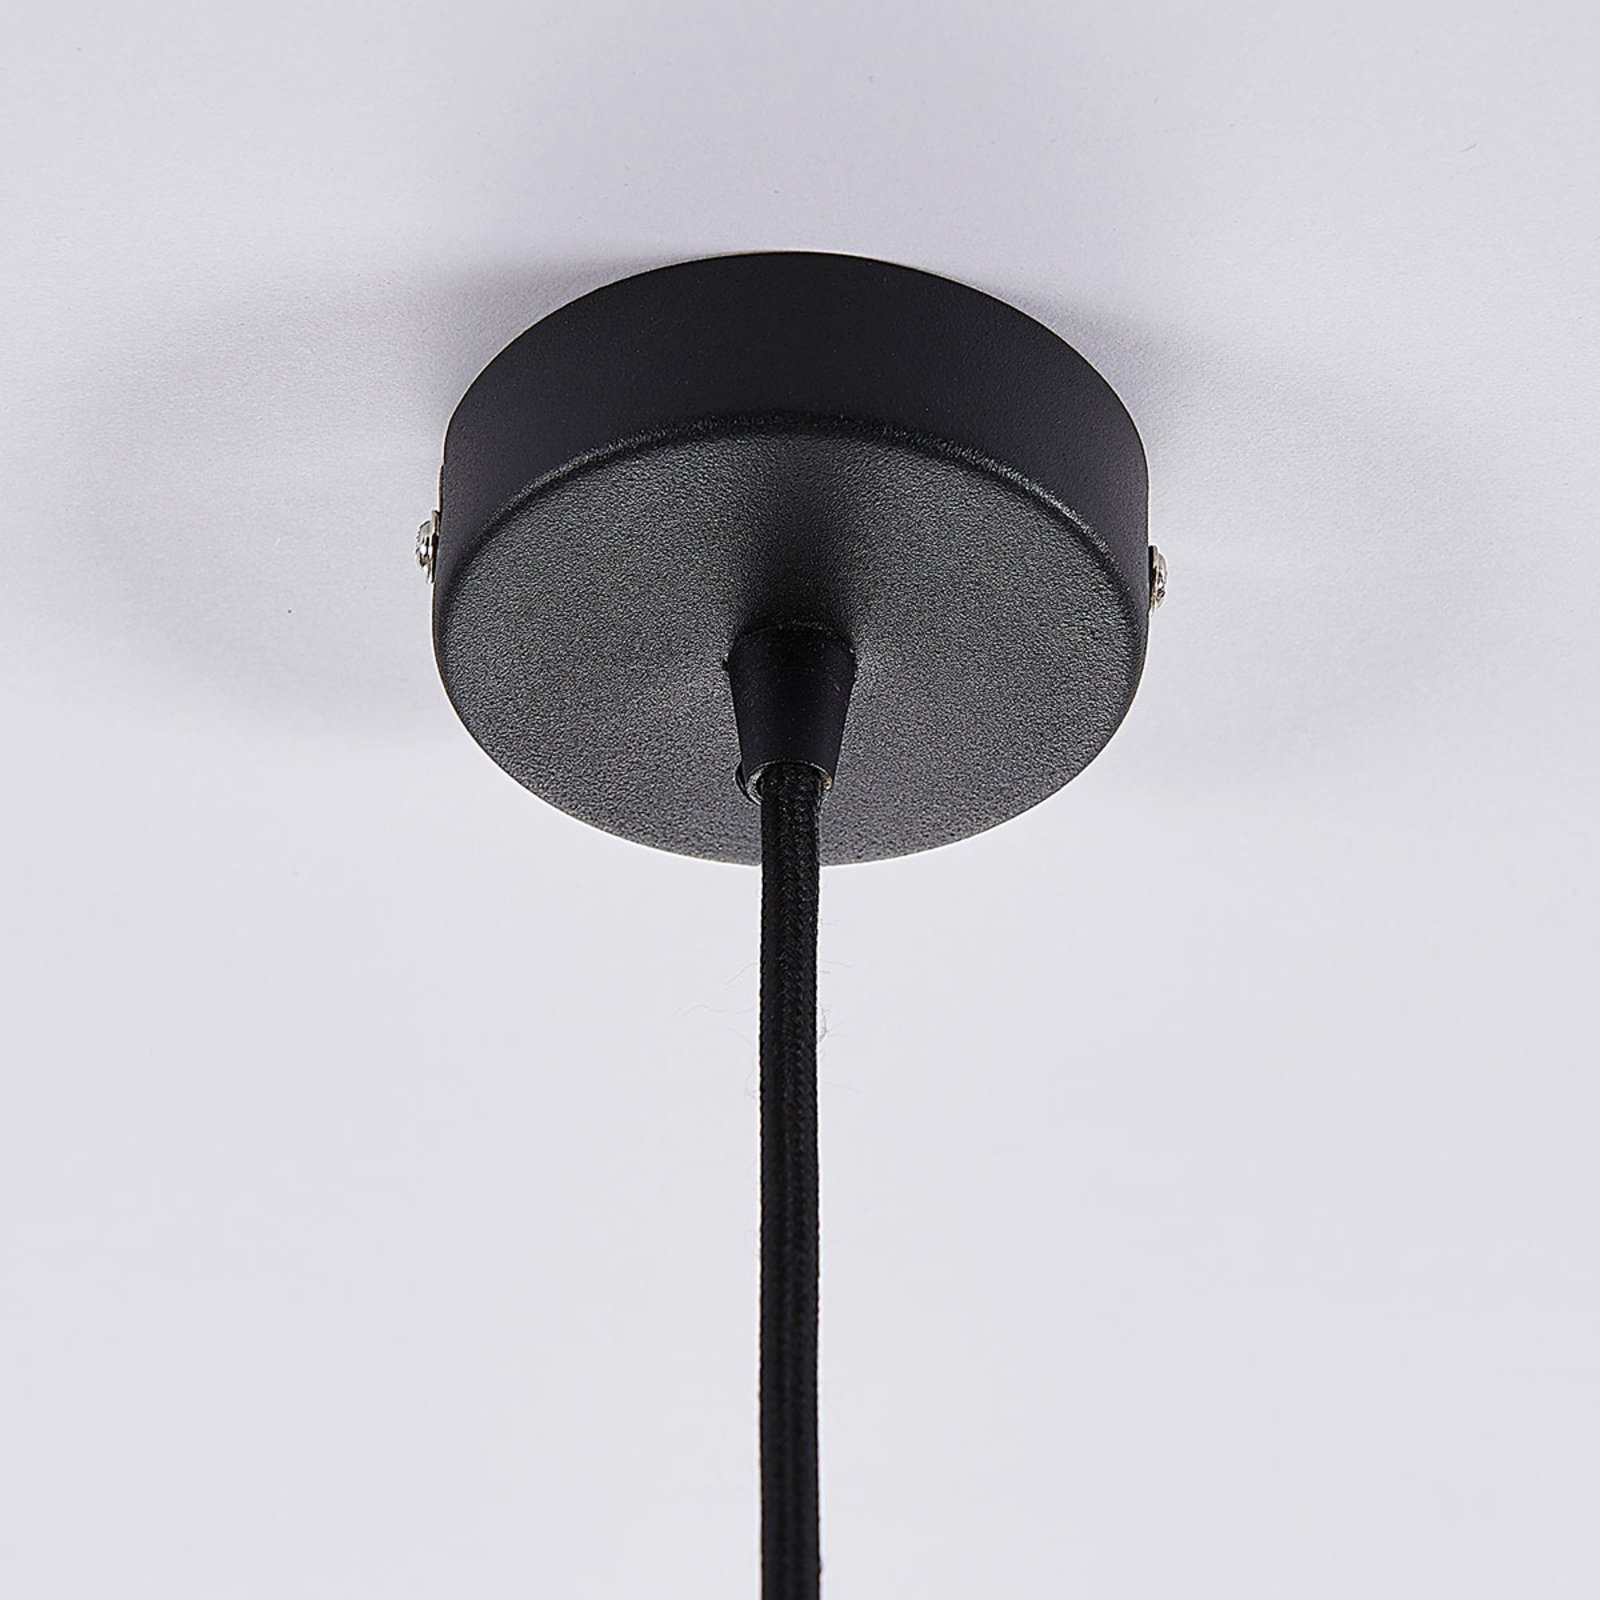 Lámpara colgante Jasminka negra, estilo industrial